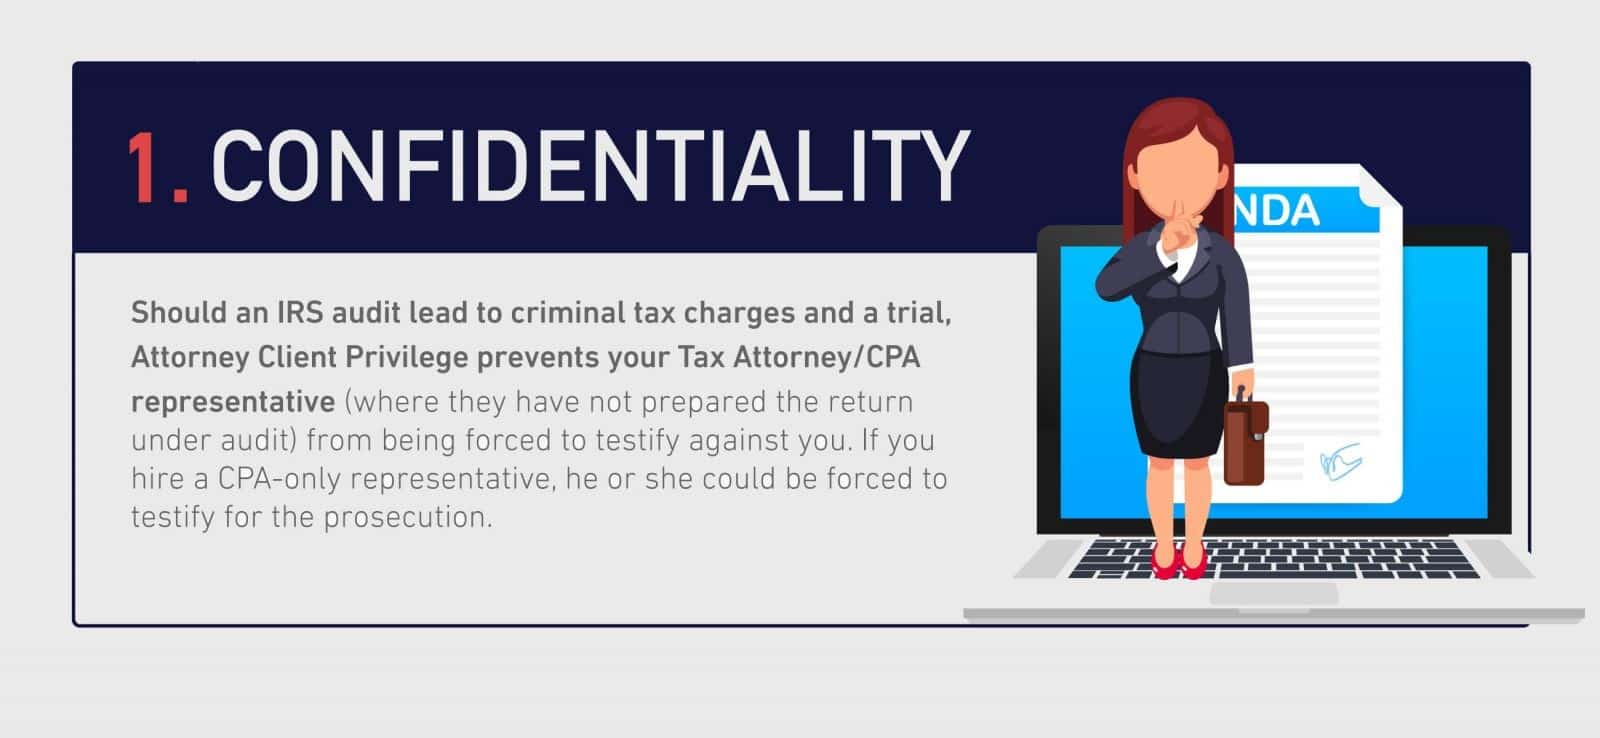 Confidentiality-klasing-associates-sacramento-tax-attorney